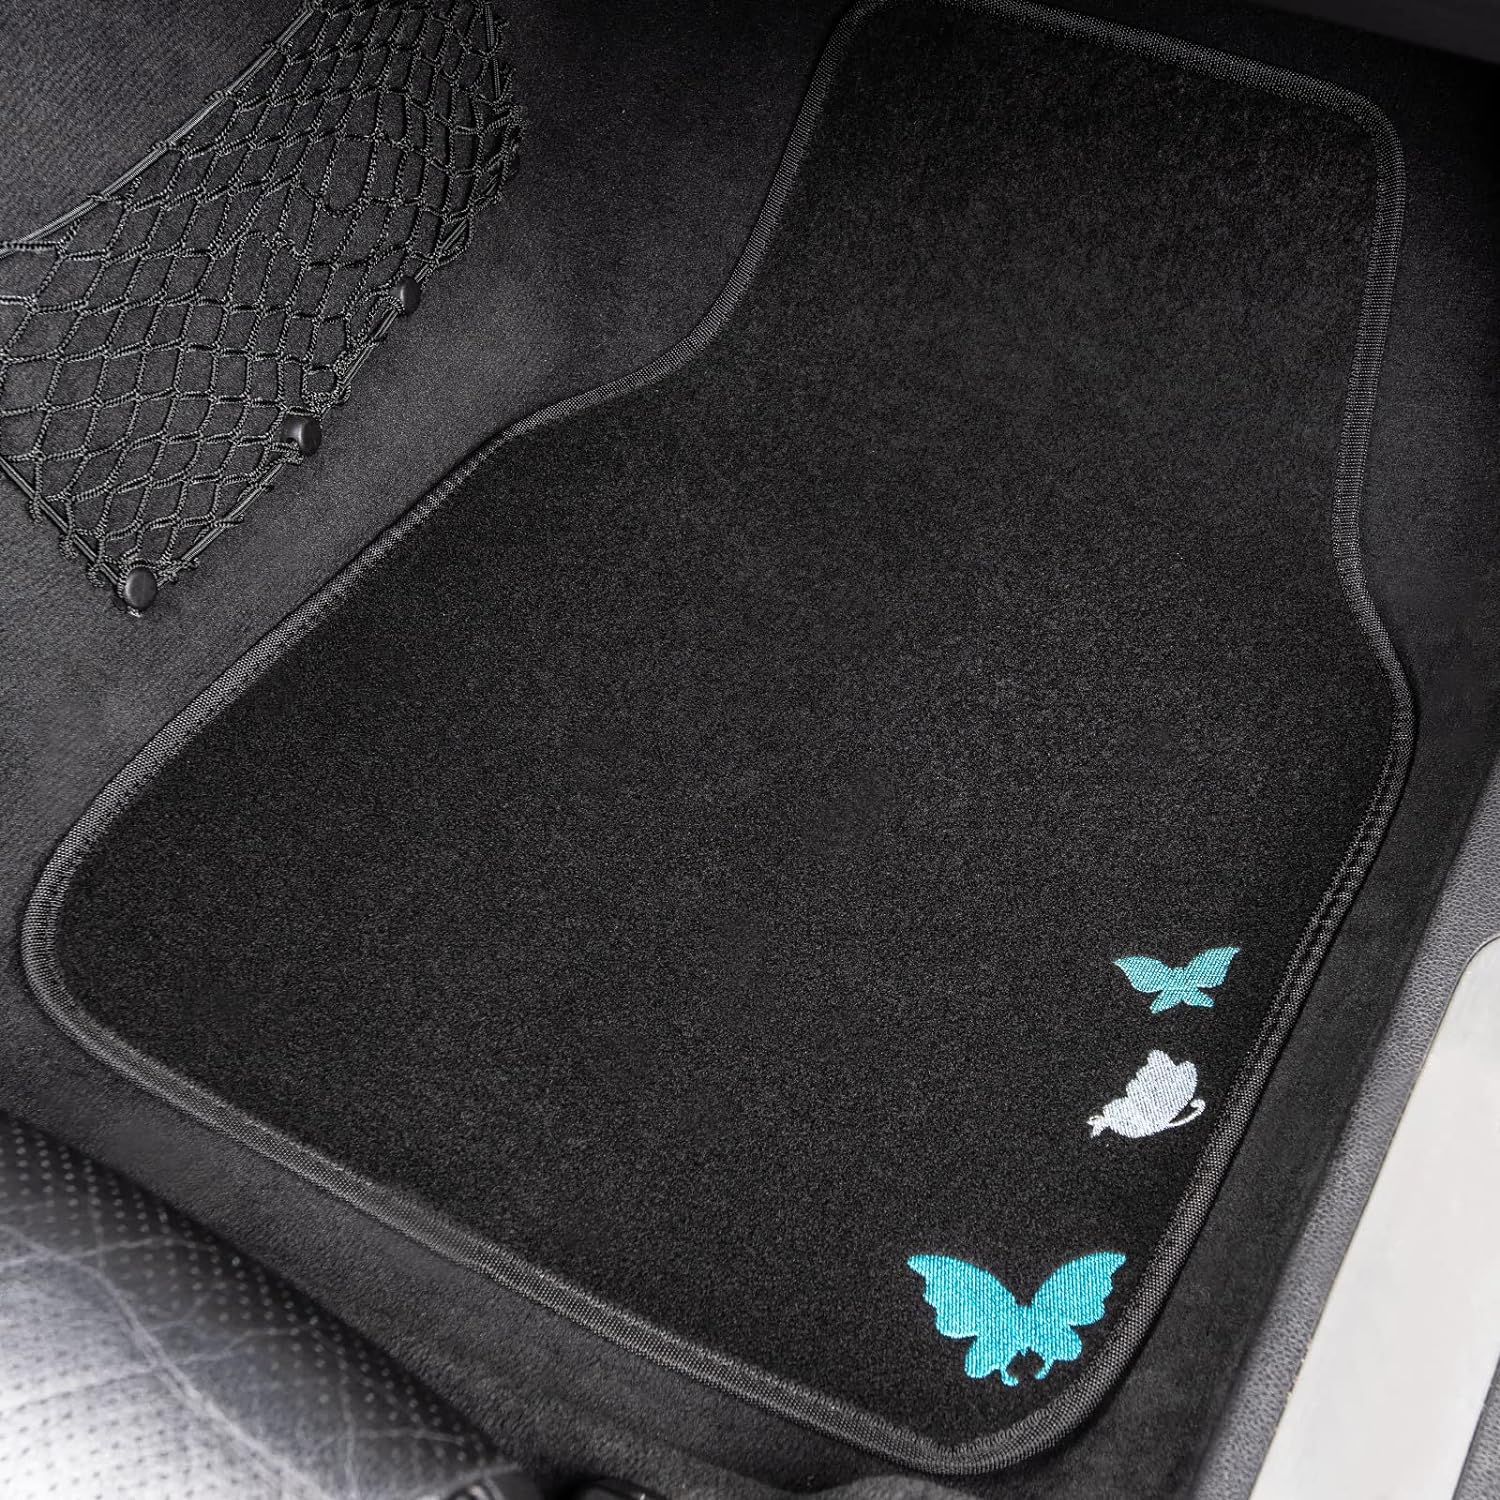 CAR PASS Universal Flying Butterflies Colorful Embroidery with Heel Pad-Waterproof-Anti Slip Nibs,Car Floor Mats for Women Cute Girly,Fit Automotive,SUVS,Sedan,Vans(Black Purple Unique Color Change)